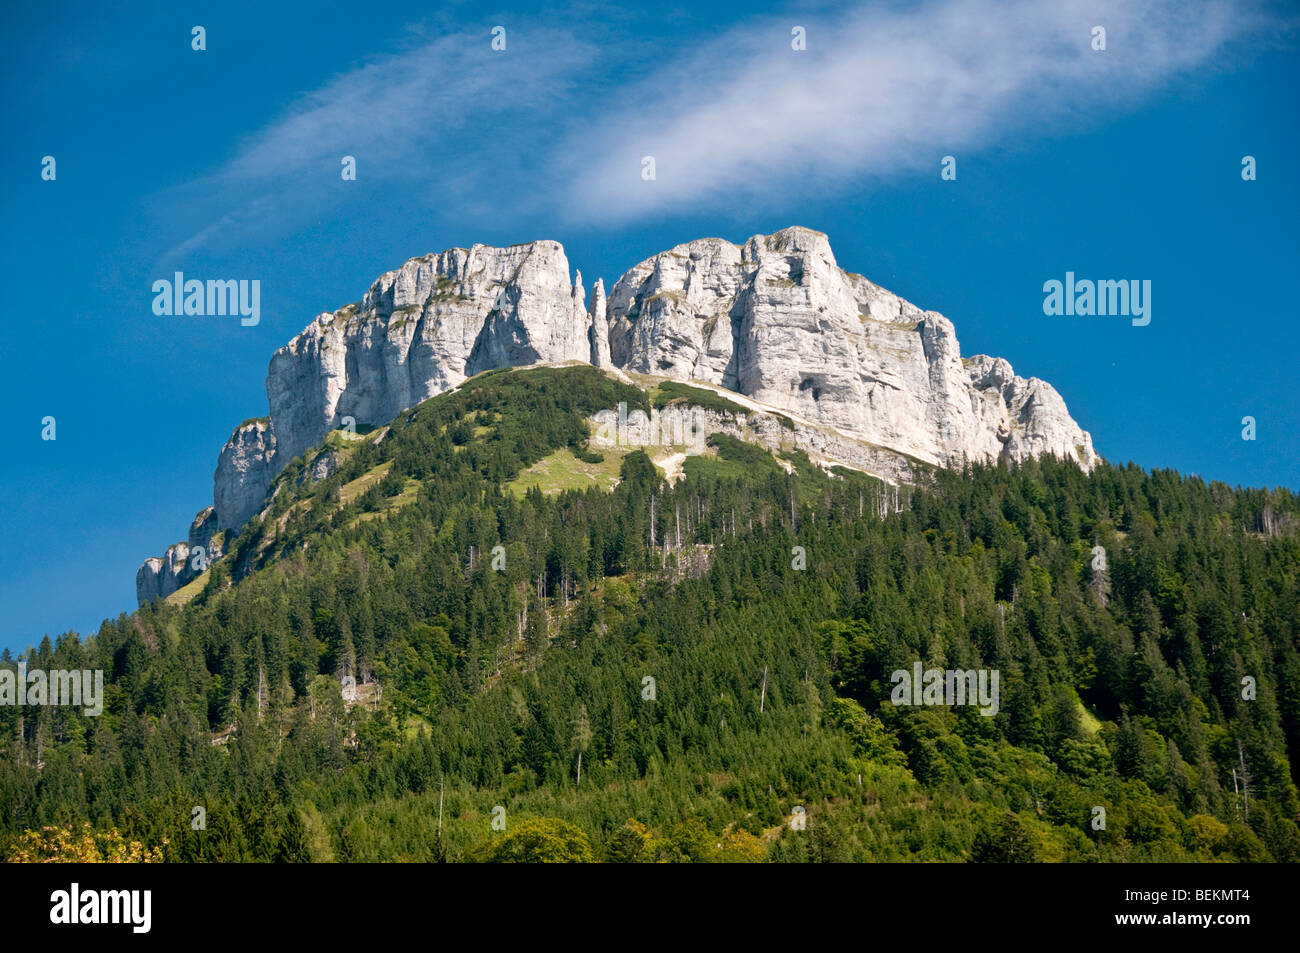 The Loser mountain in Steiermark Austria Stock Photo